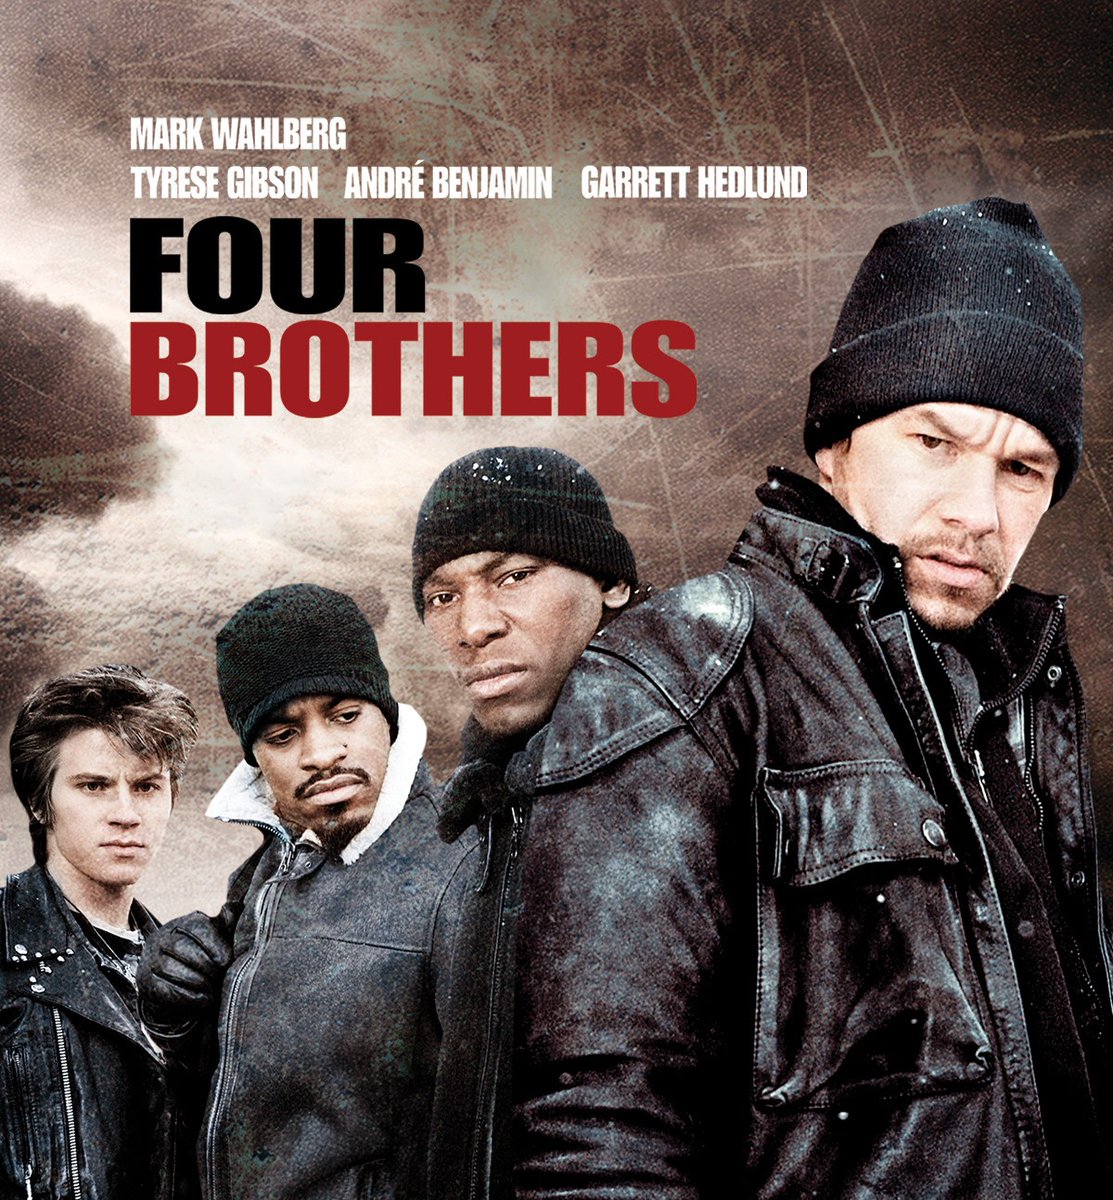 🎉👨‍👨‍👦‍👦 Celebrating 'Four Brothers' on its Anniversary! 🌟🔫

#FourBrothers #OnThisDay #2005Movie #FamilyDrama #JohnSingleton #BrotherlyBond #MovieAnniversary #AdoptedBrothers #CriminalUnderworld  #MarkWahlberg #TyreseGibson #AndréBenjamin #GarrettHedlund #HonoringFamily